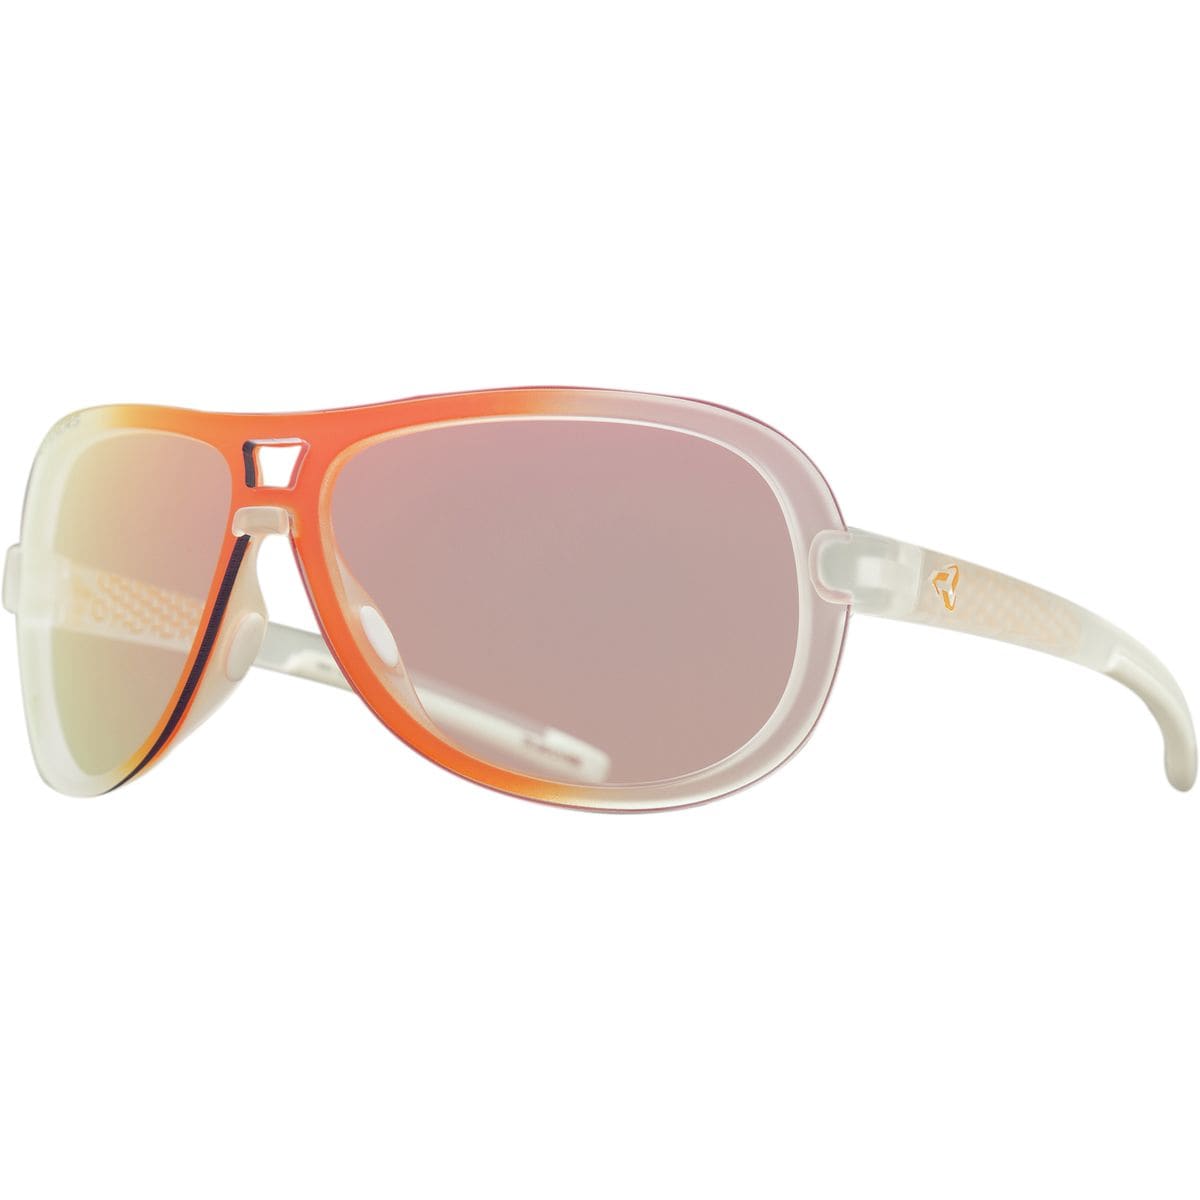 Ryders Eyewear Aero Photochromic Sunglasses Women's